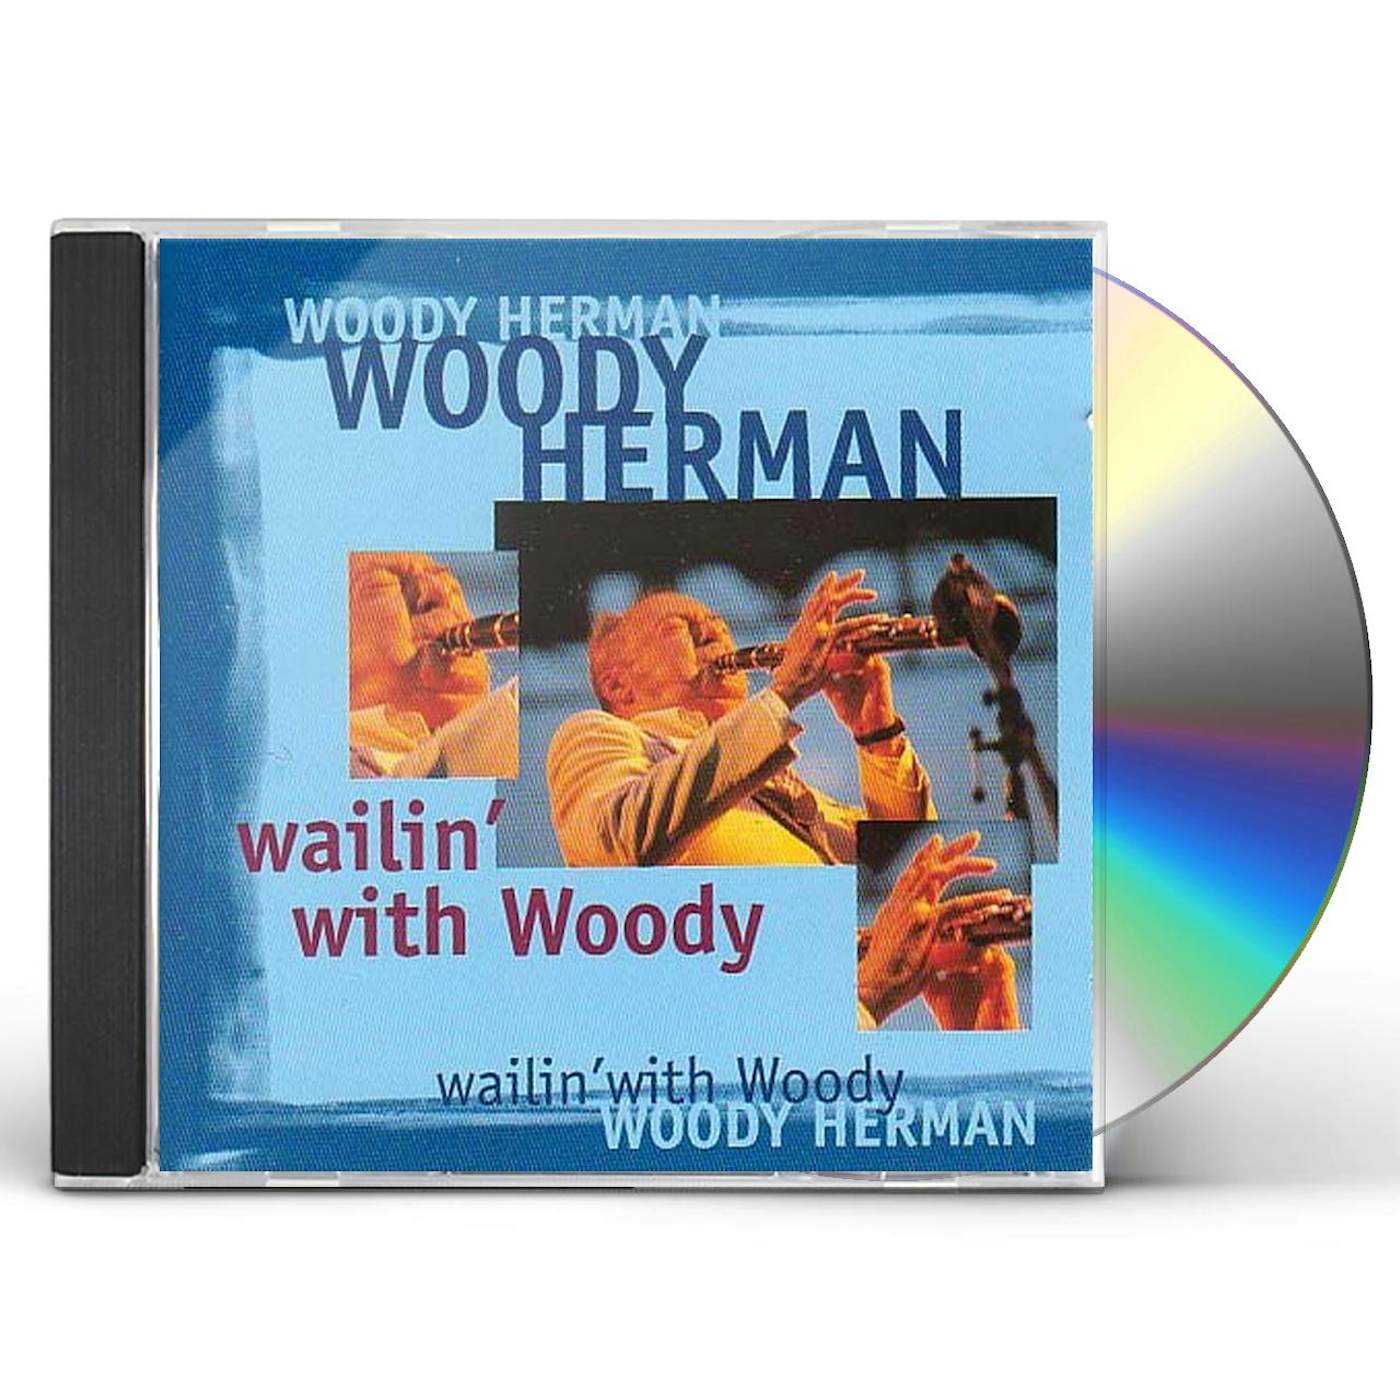 Woody Herman WAILIN WITH WOODY CD